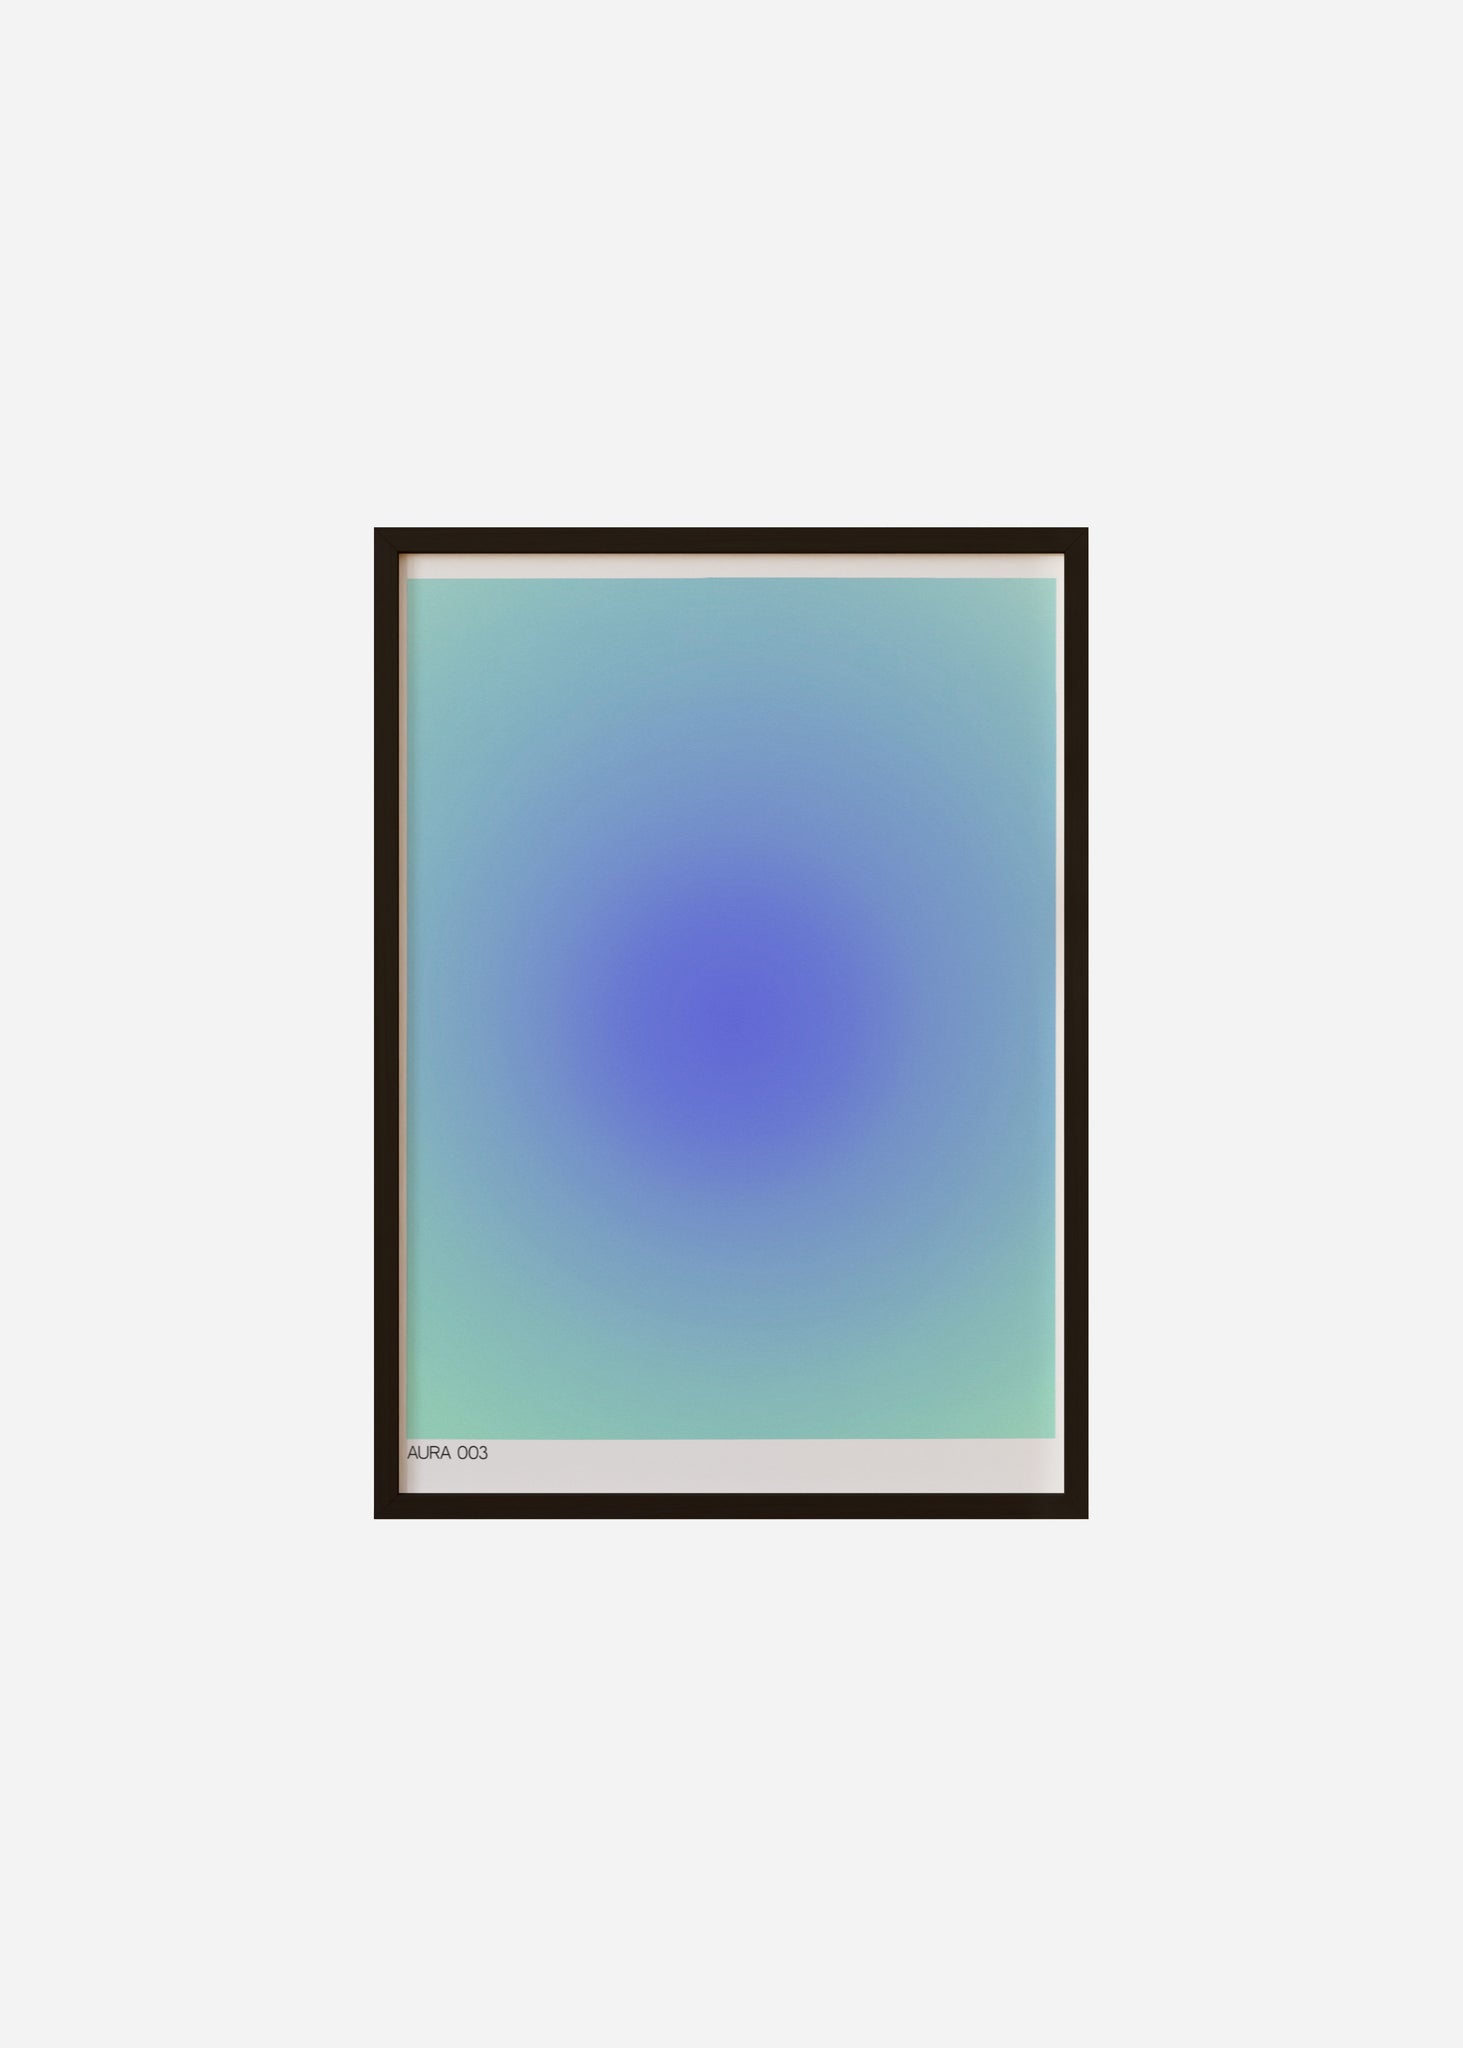 aura 003 Framed Print